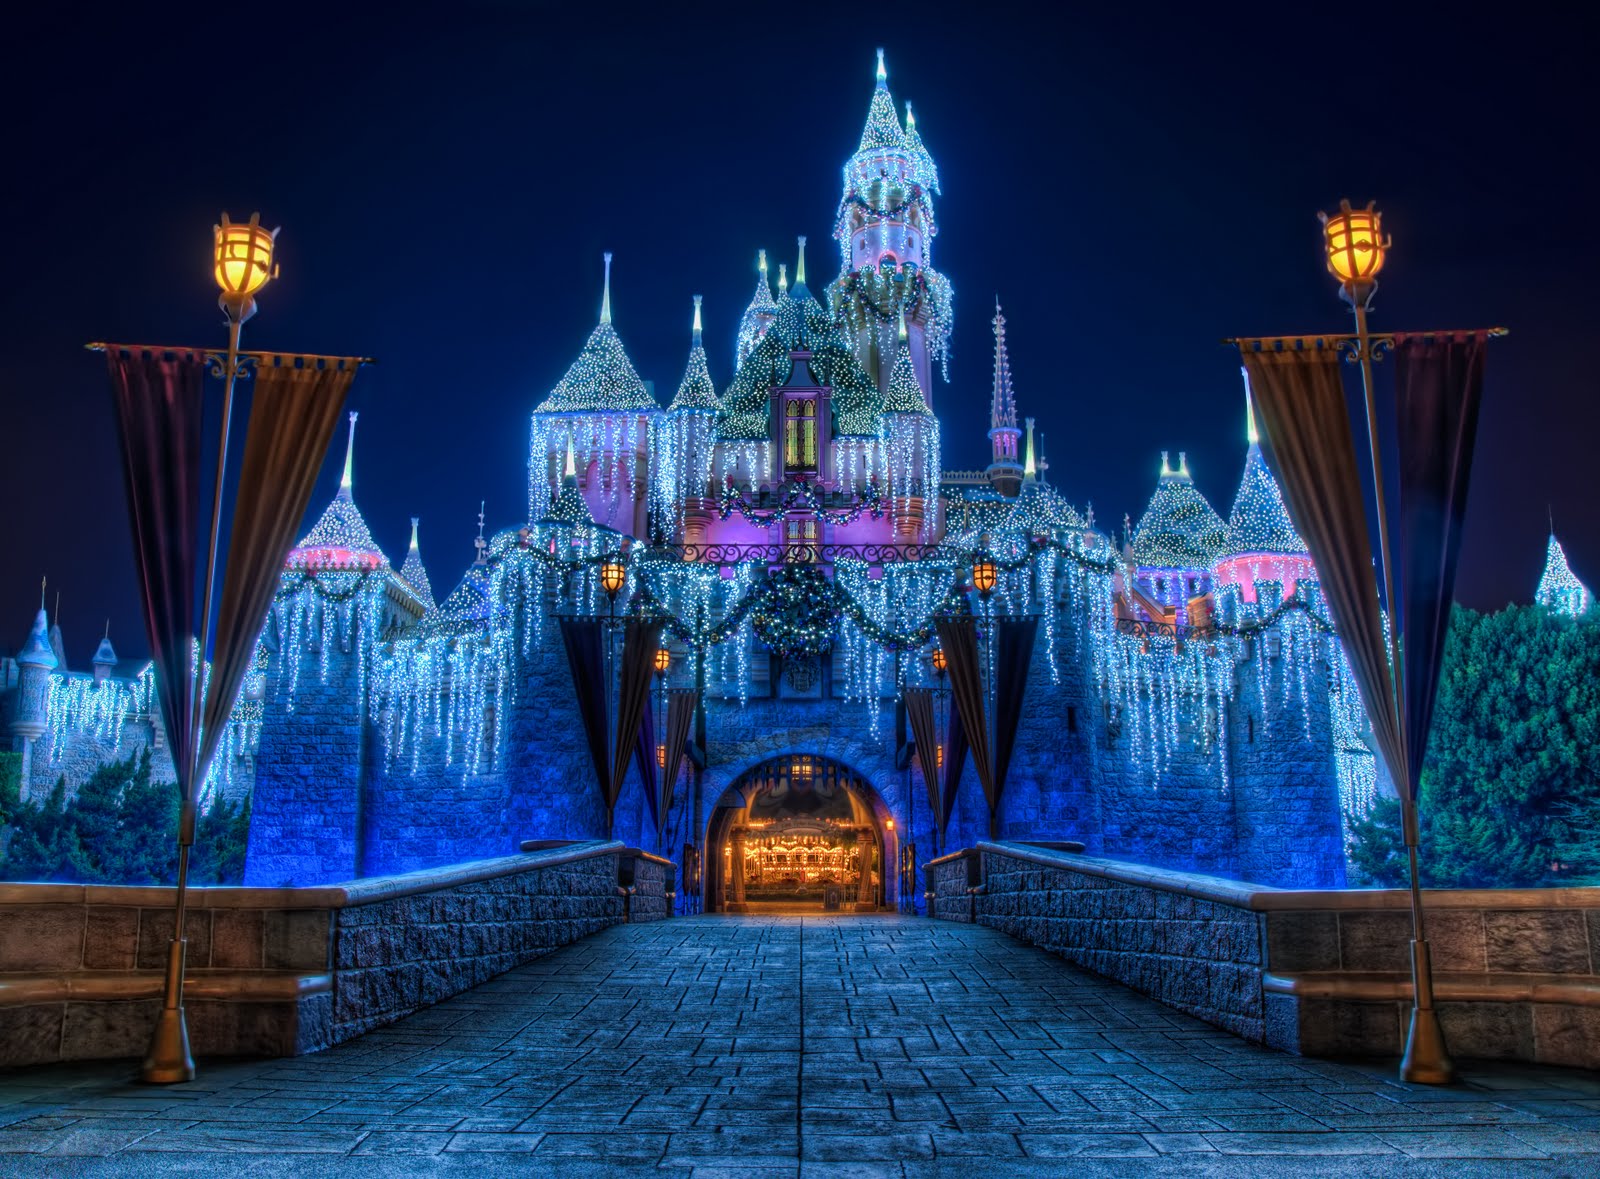 Celebrate the holiday season as the Disneyland Resort transforms into